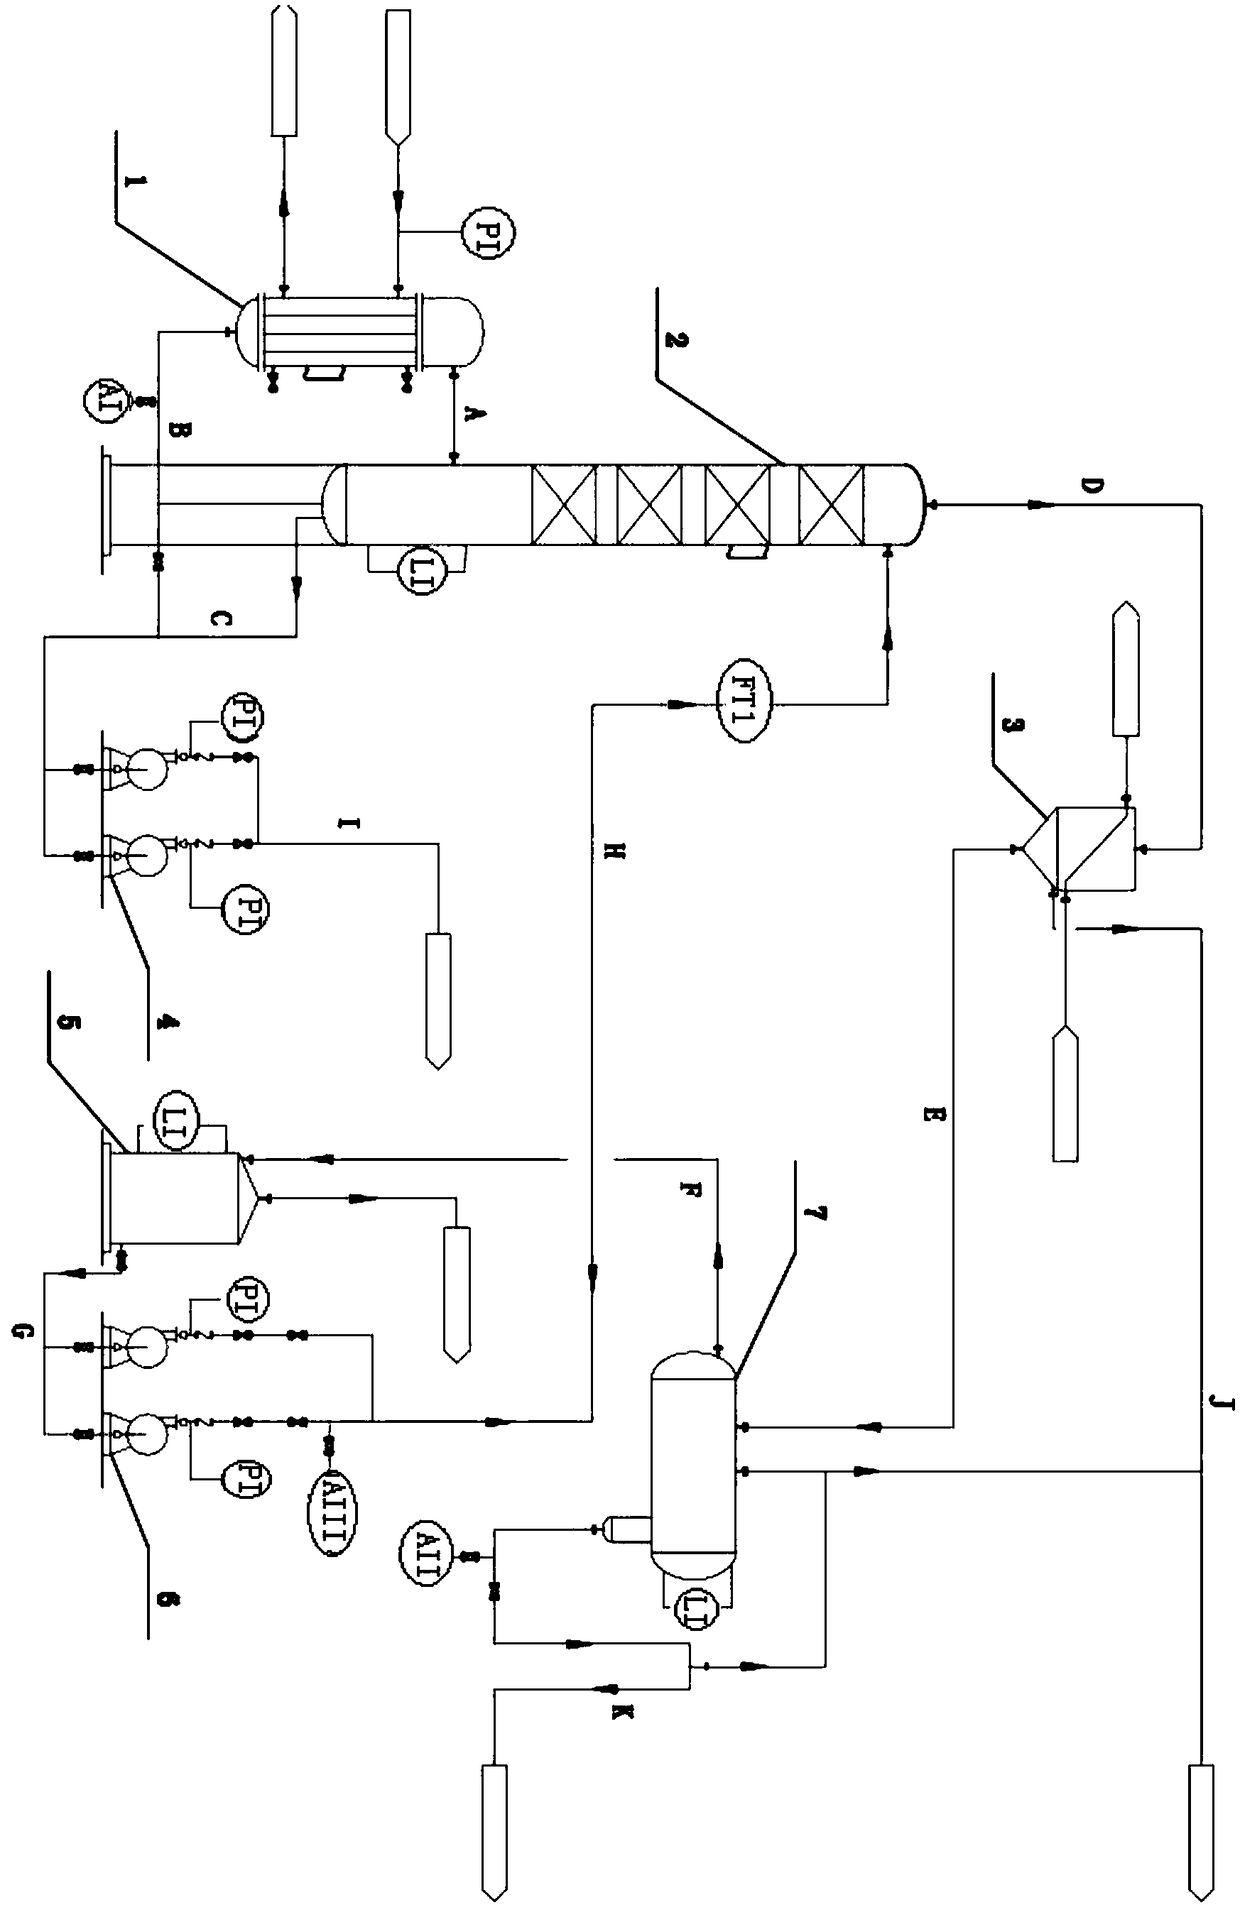 Novel dewatering system for production of methoxy-1-methylethylacetate